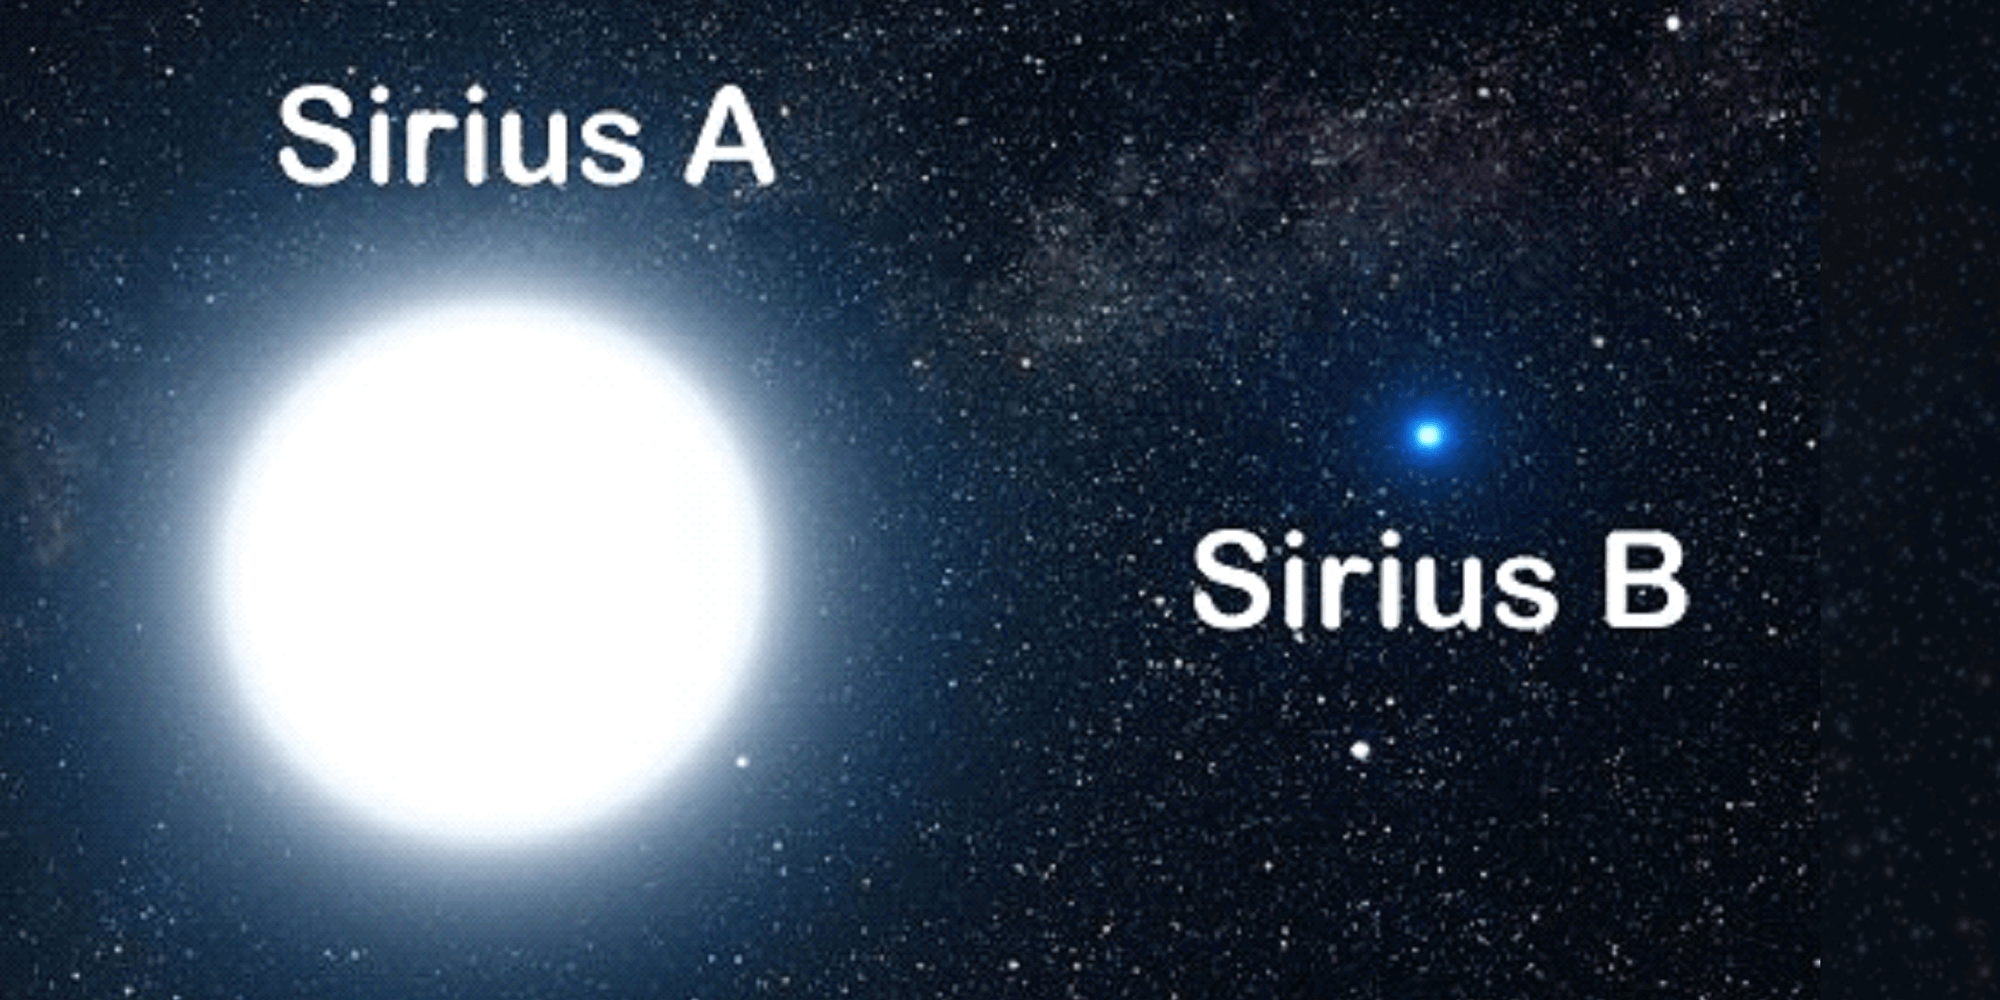 Sirius A with the white dwarf called Sirius B